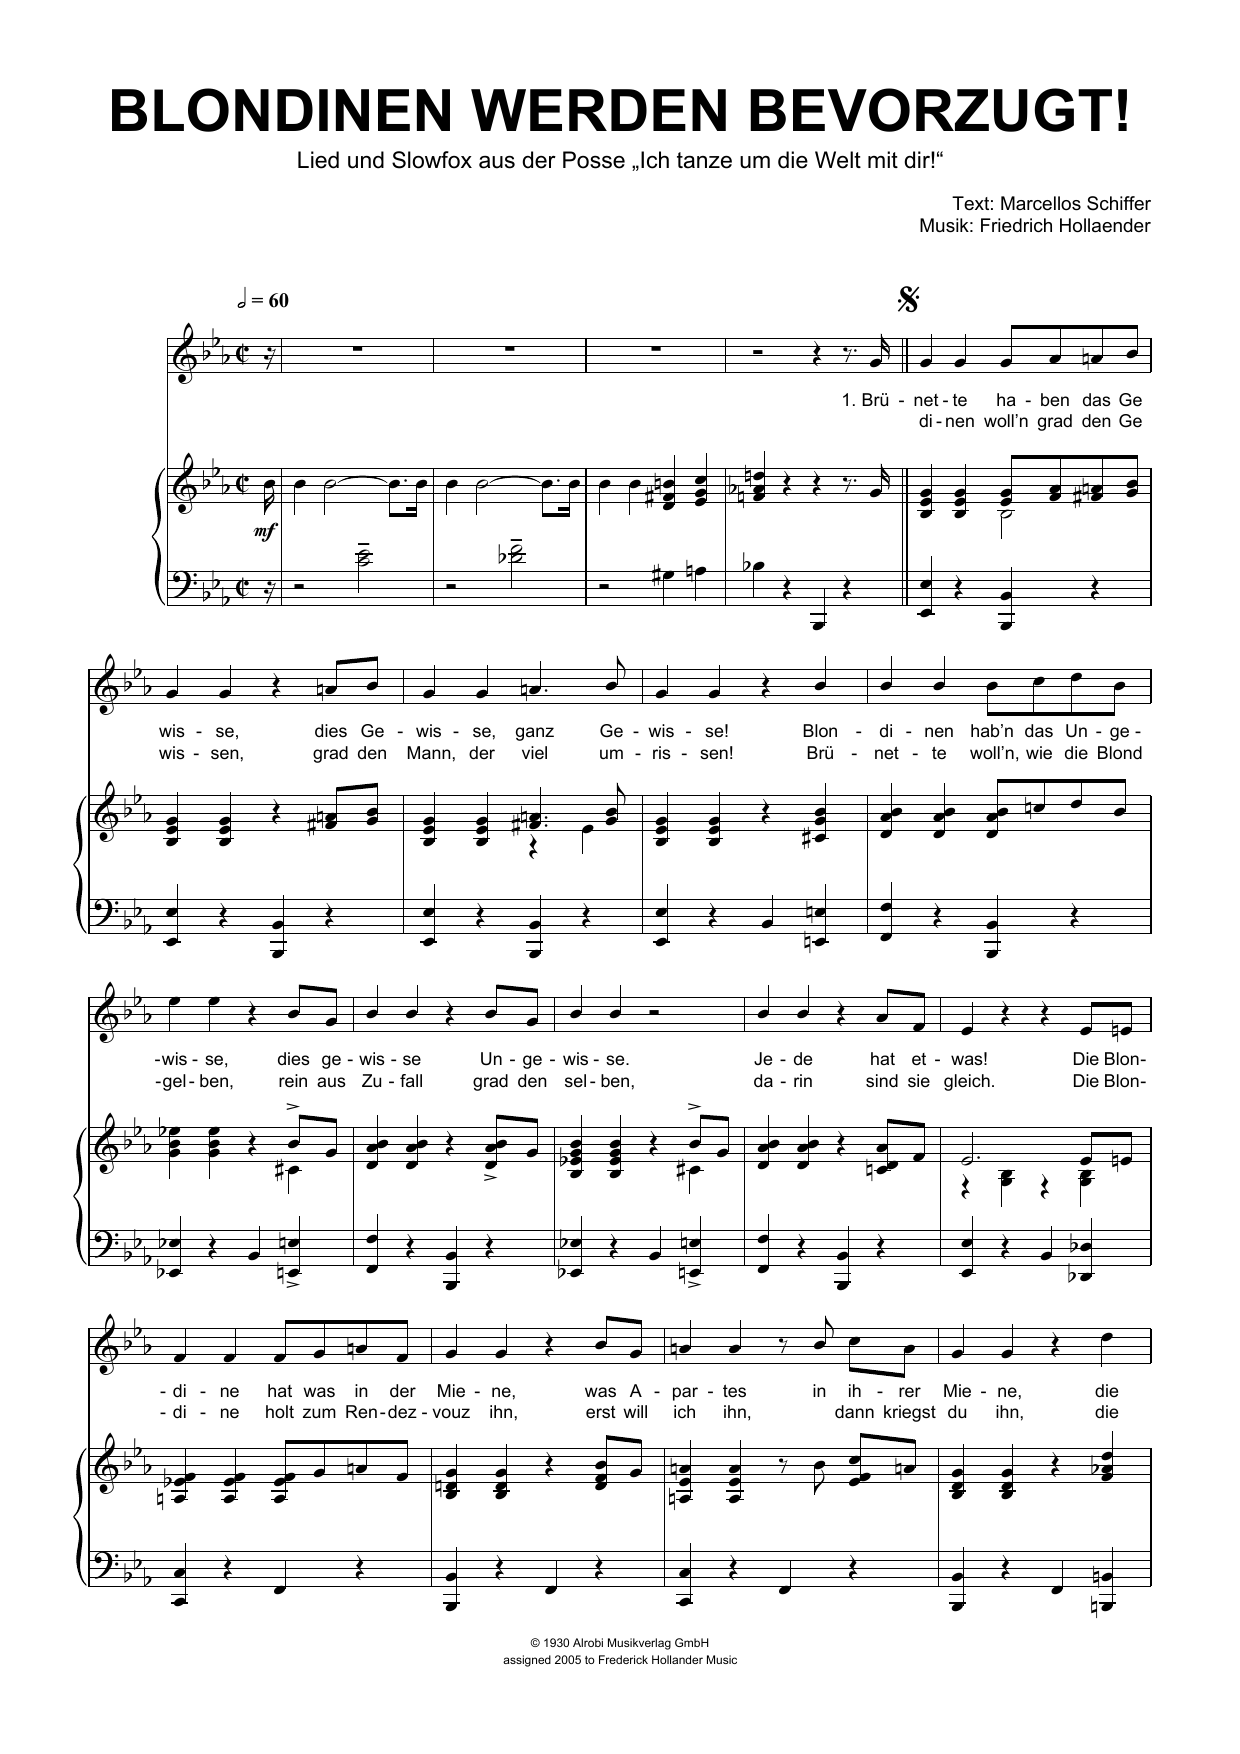 Download Friedrich Hollaender Blondinen Werden Bevorzugt! Sheet Music and learn how to play Piano & Vocal PDF digital score in minutes